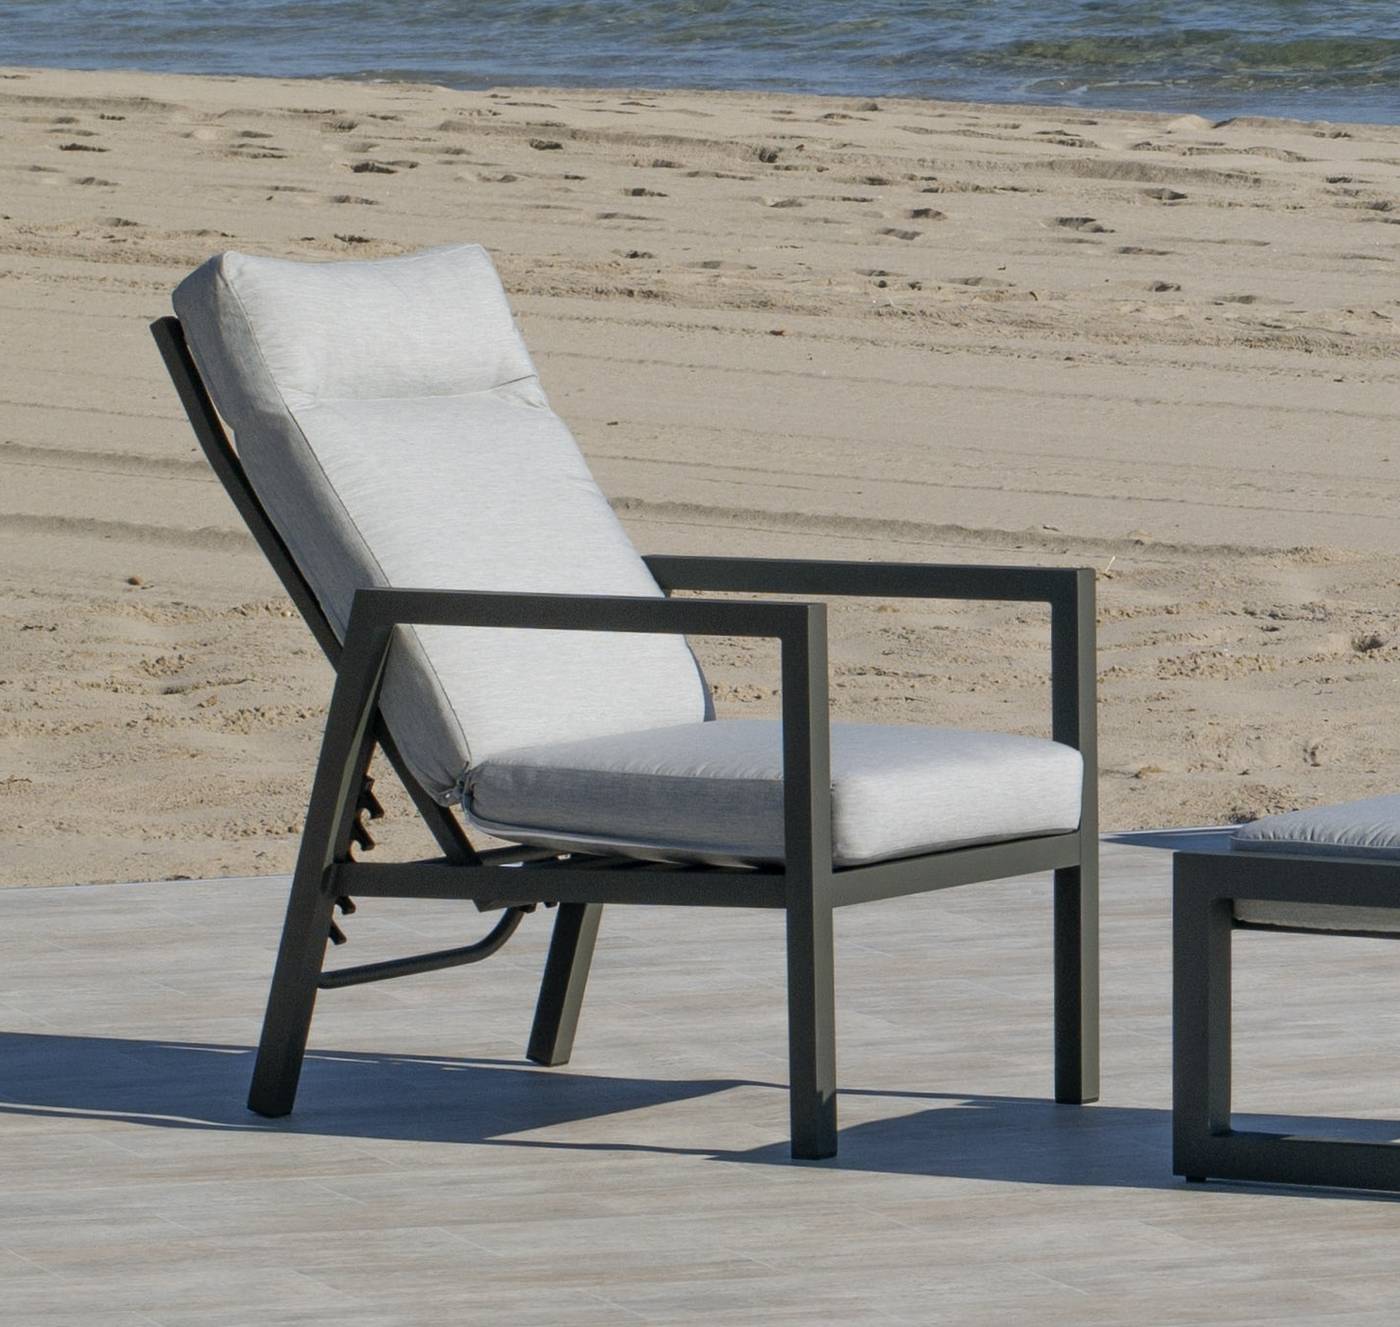 Set Aluminio Voriam-10 - Conjunto aluminio: sofá 3 plazas + 2 sillones + mesa de centro + 2 taburetes. Respaldos reclinables. Colores: blanco, antracita, champagne, plata o marrón.